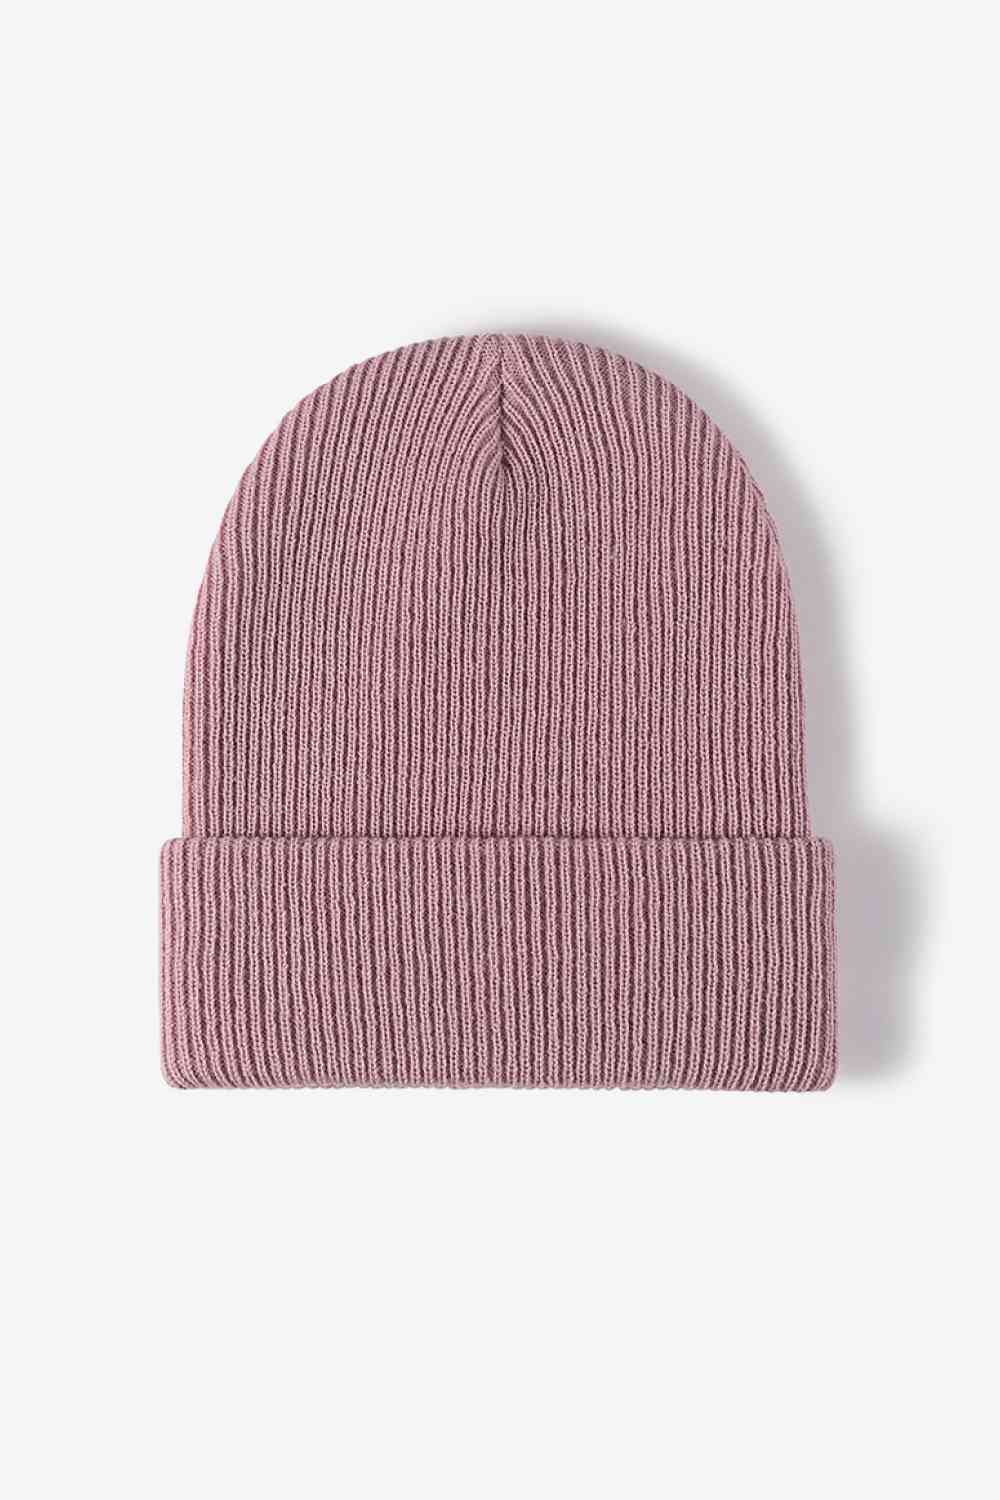 Warm Winter Knit Beanie Pink One Size